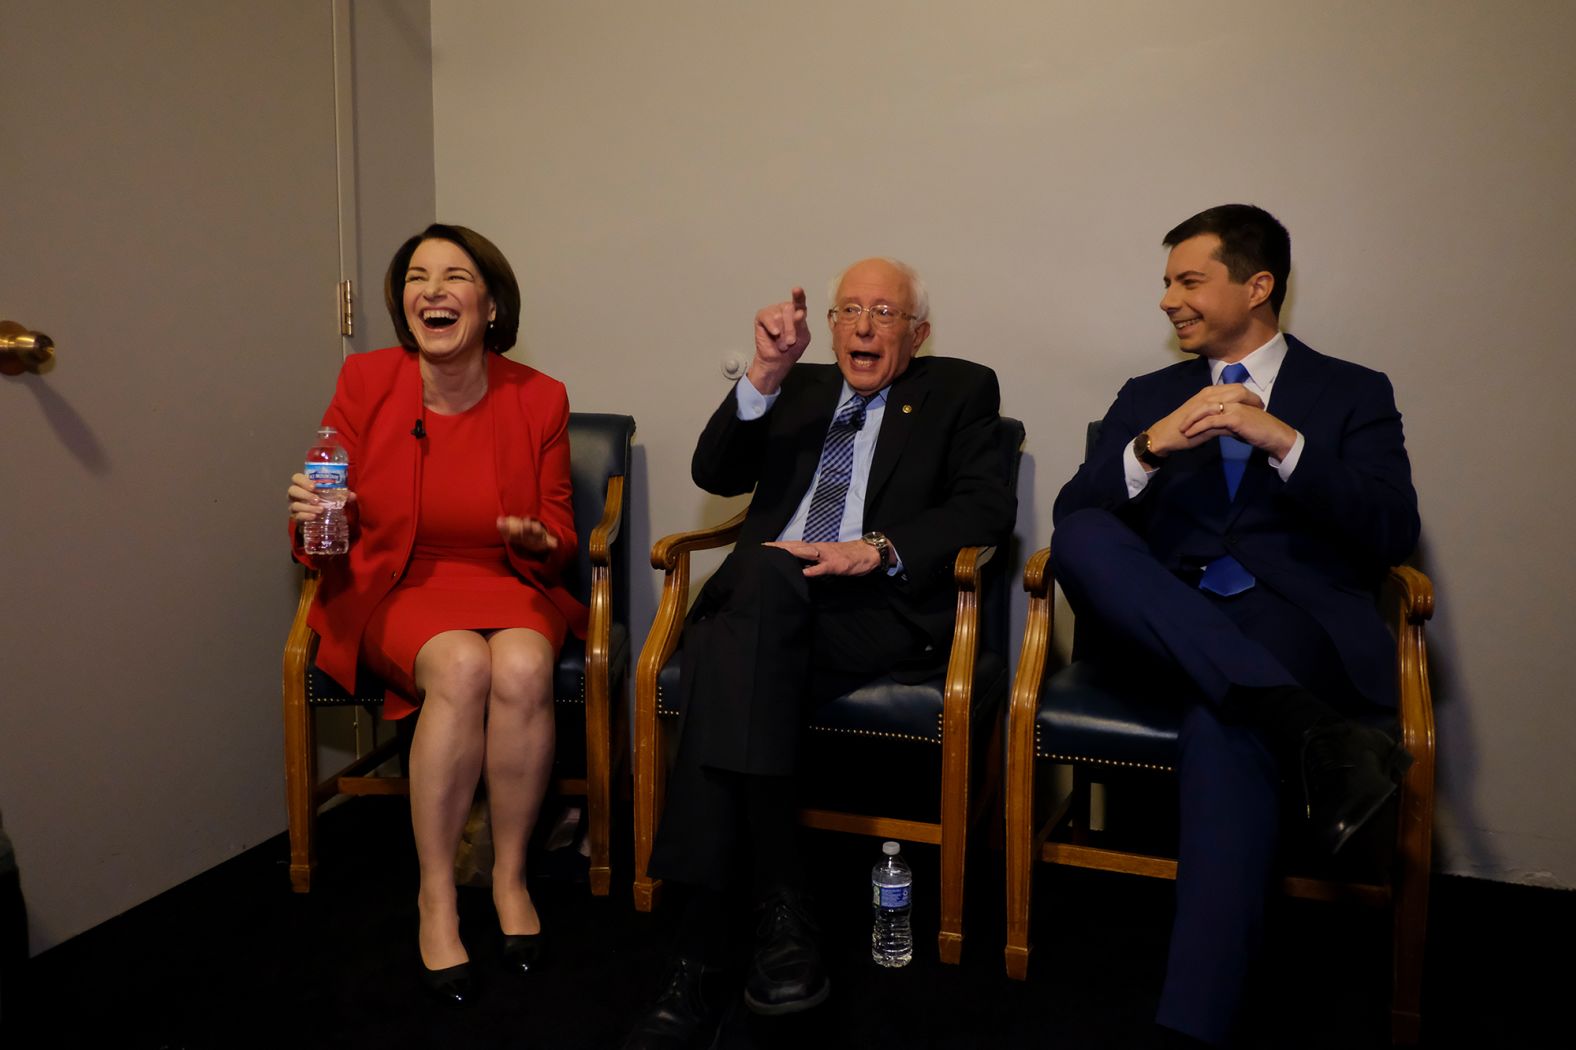 Klobuchar, Sanders and Buttigieg talk backstage before the debate.